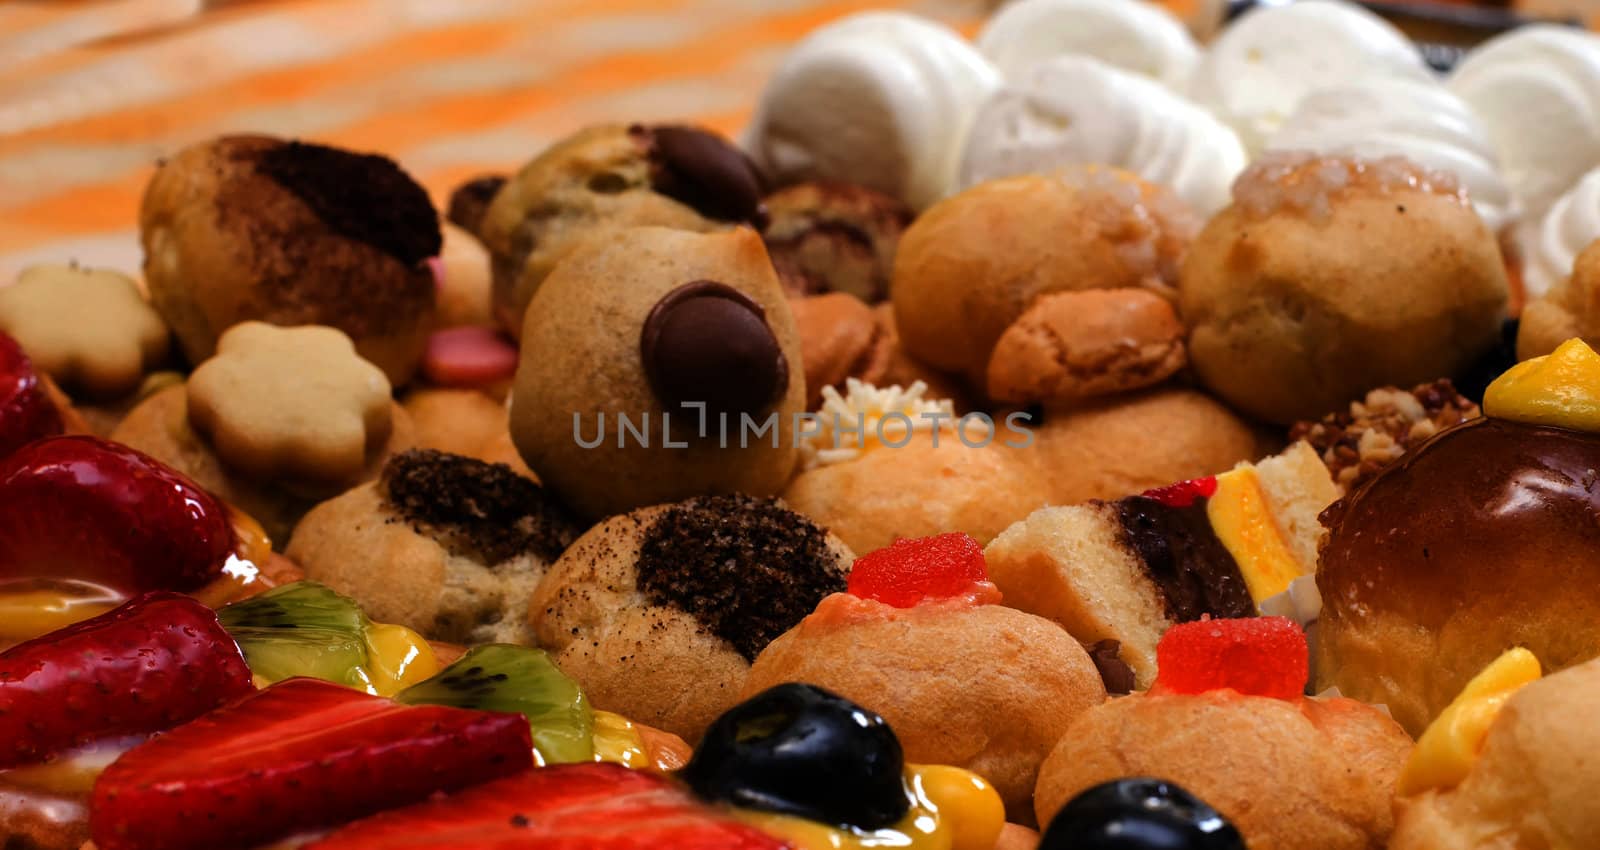 Delicious, handmade dessert: tarts, pastries, cakes with fruit, cream, icing